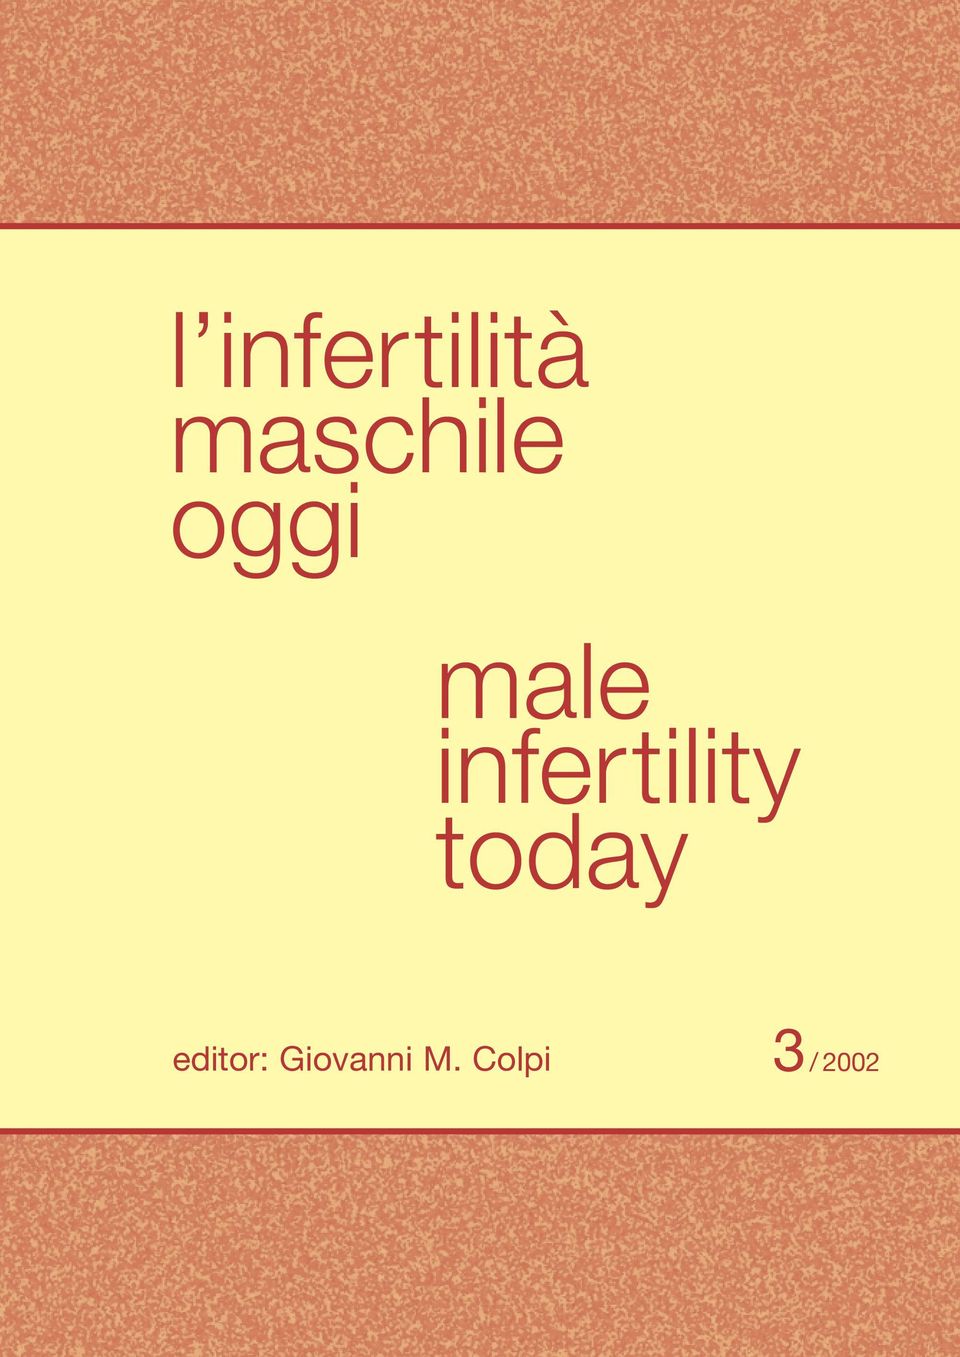 infertility today